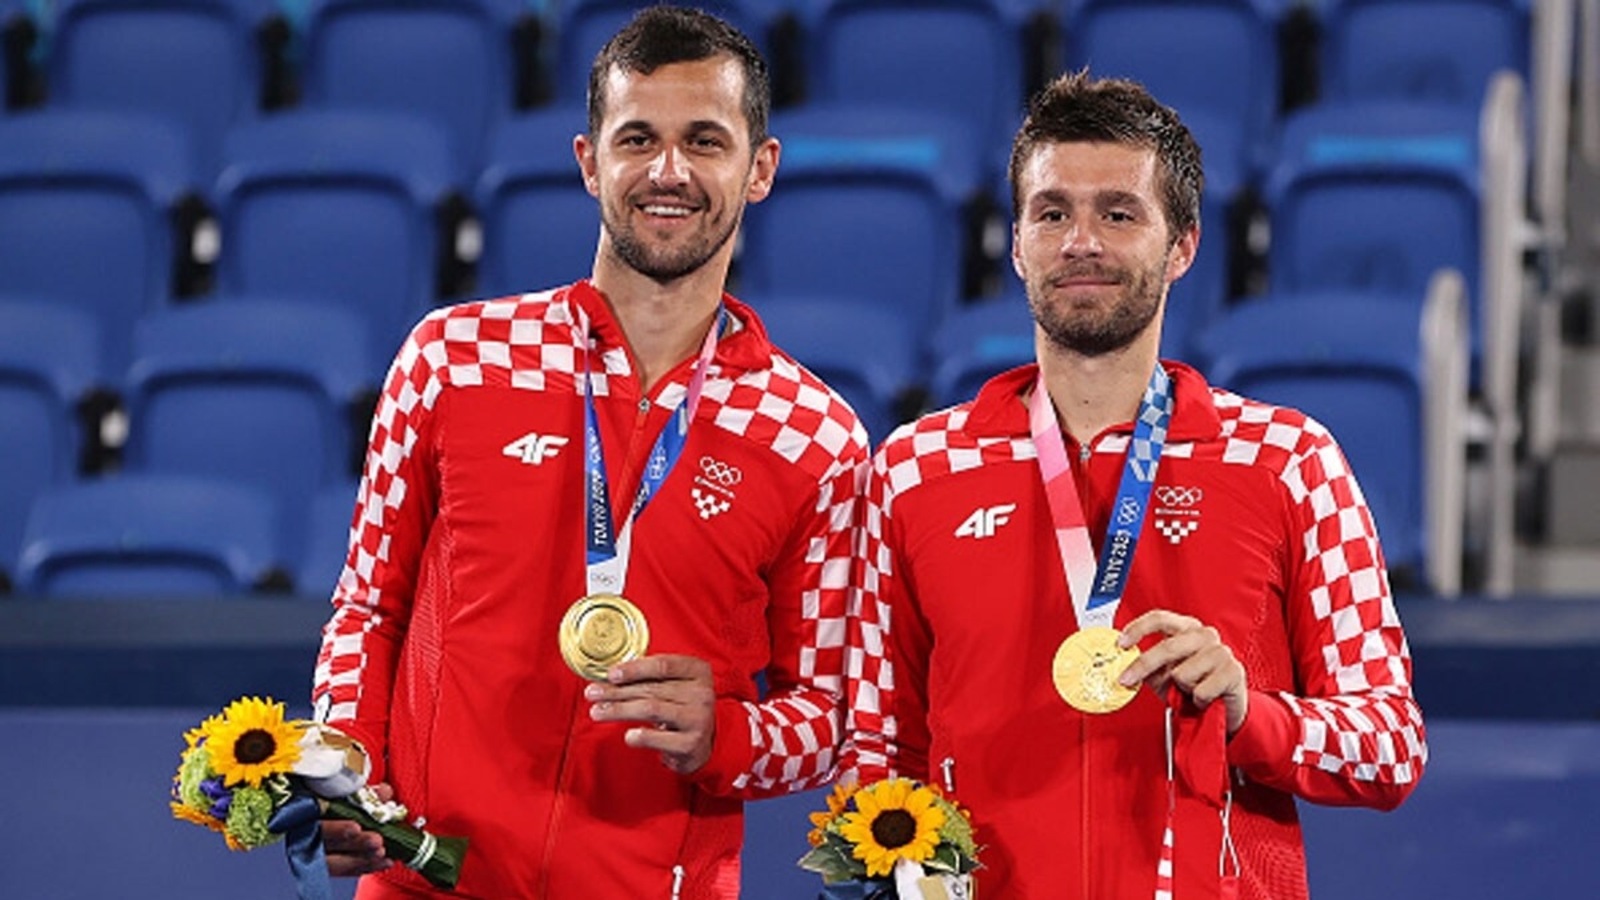 Tokyo 2020 Croatias Mektic and Pavic win mens doubles gold Olympics